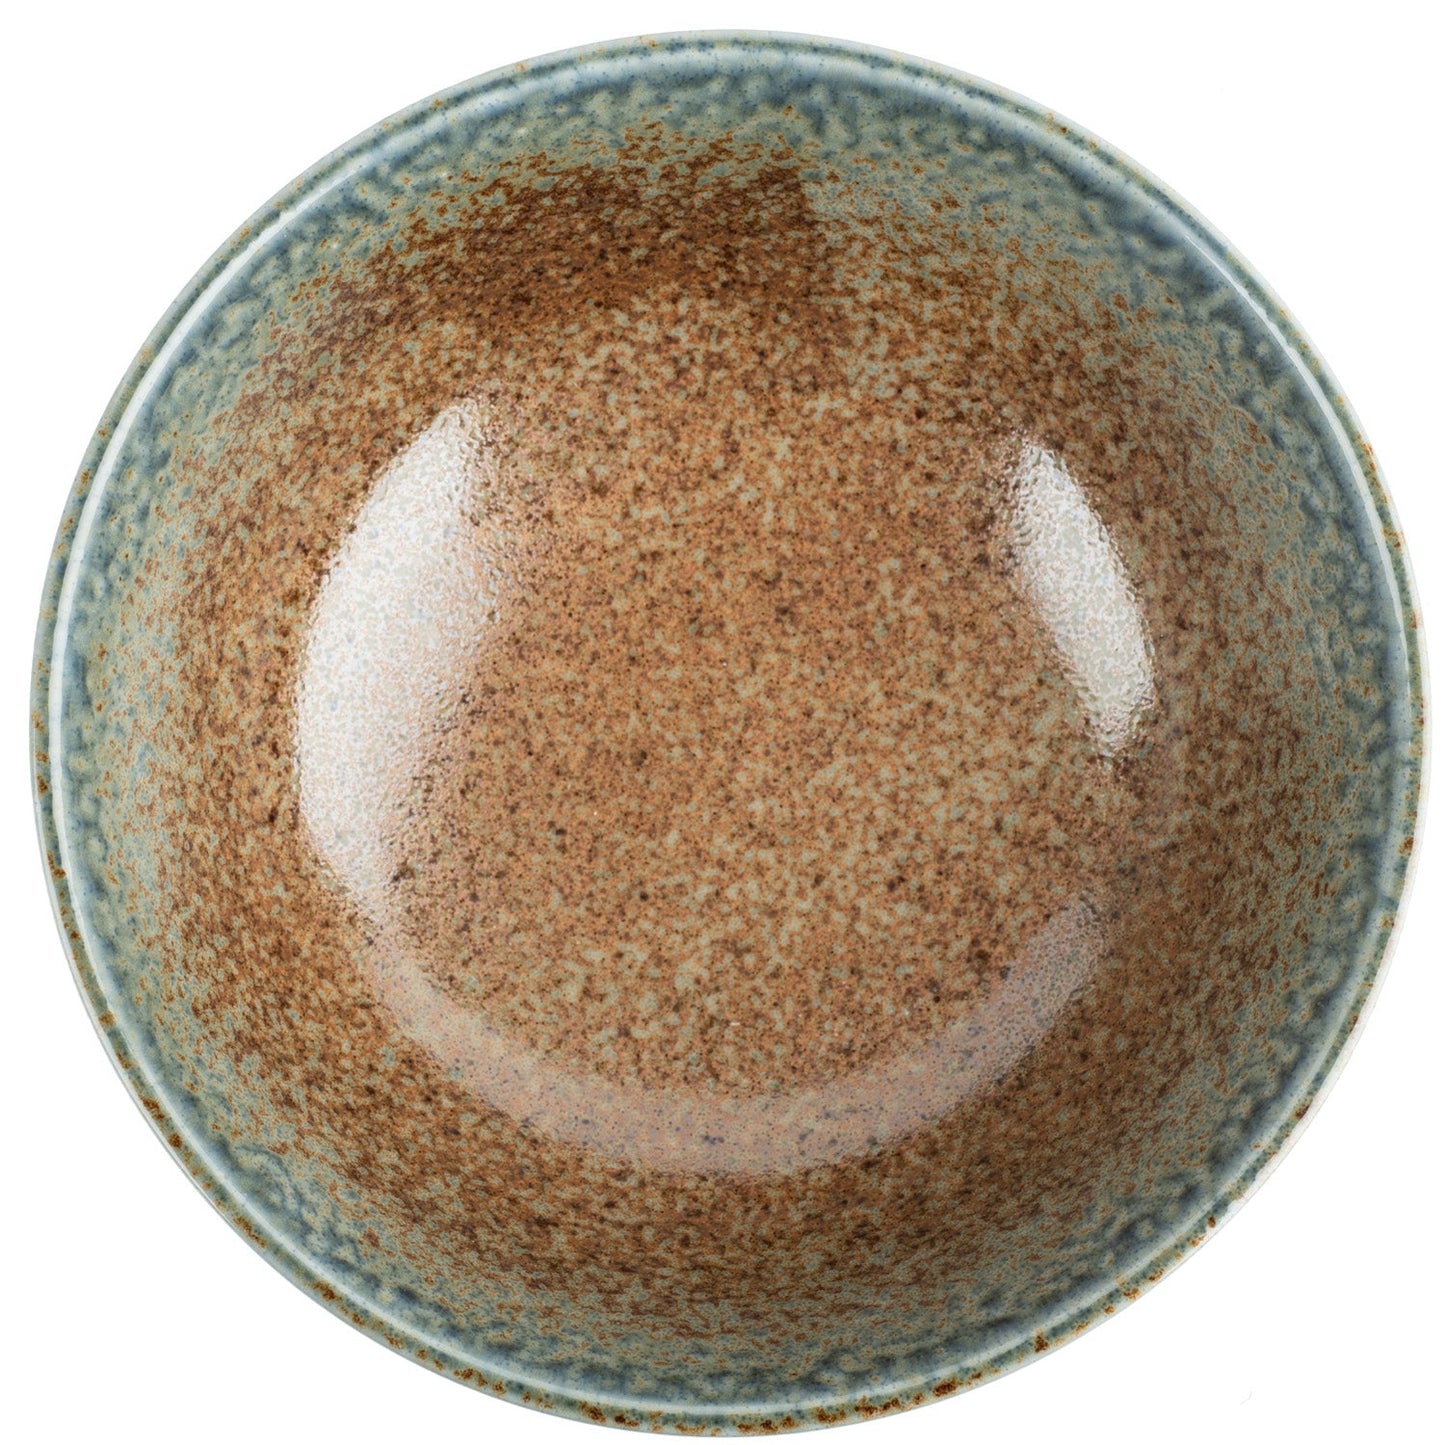 Aki Ceramic Japanese Ramen Bowl top